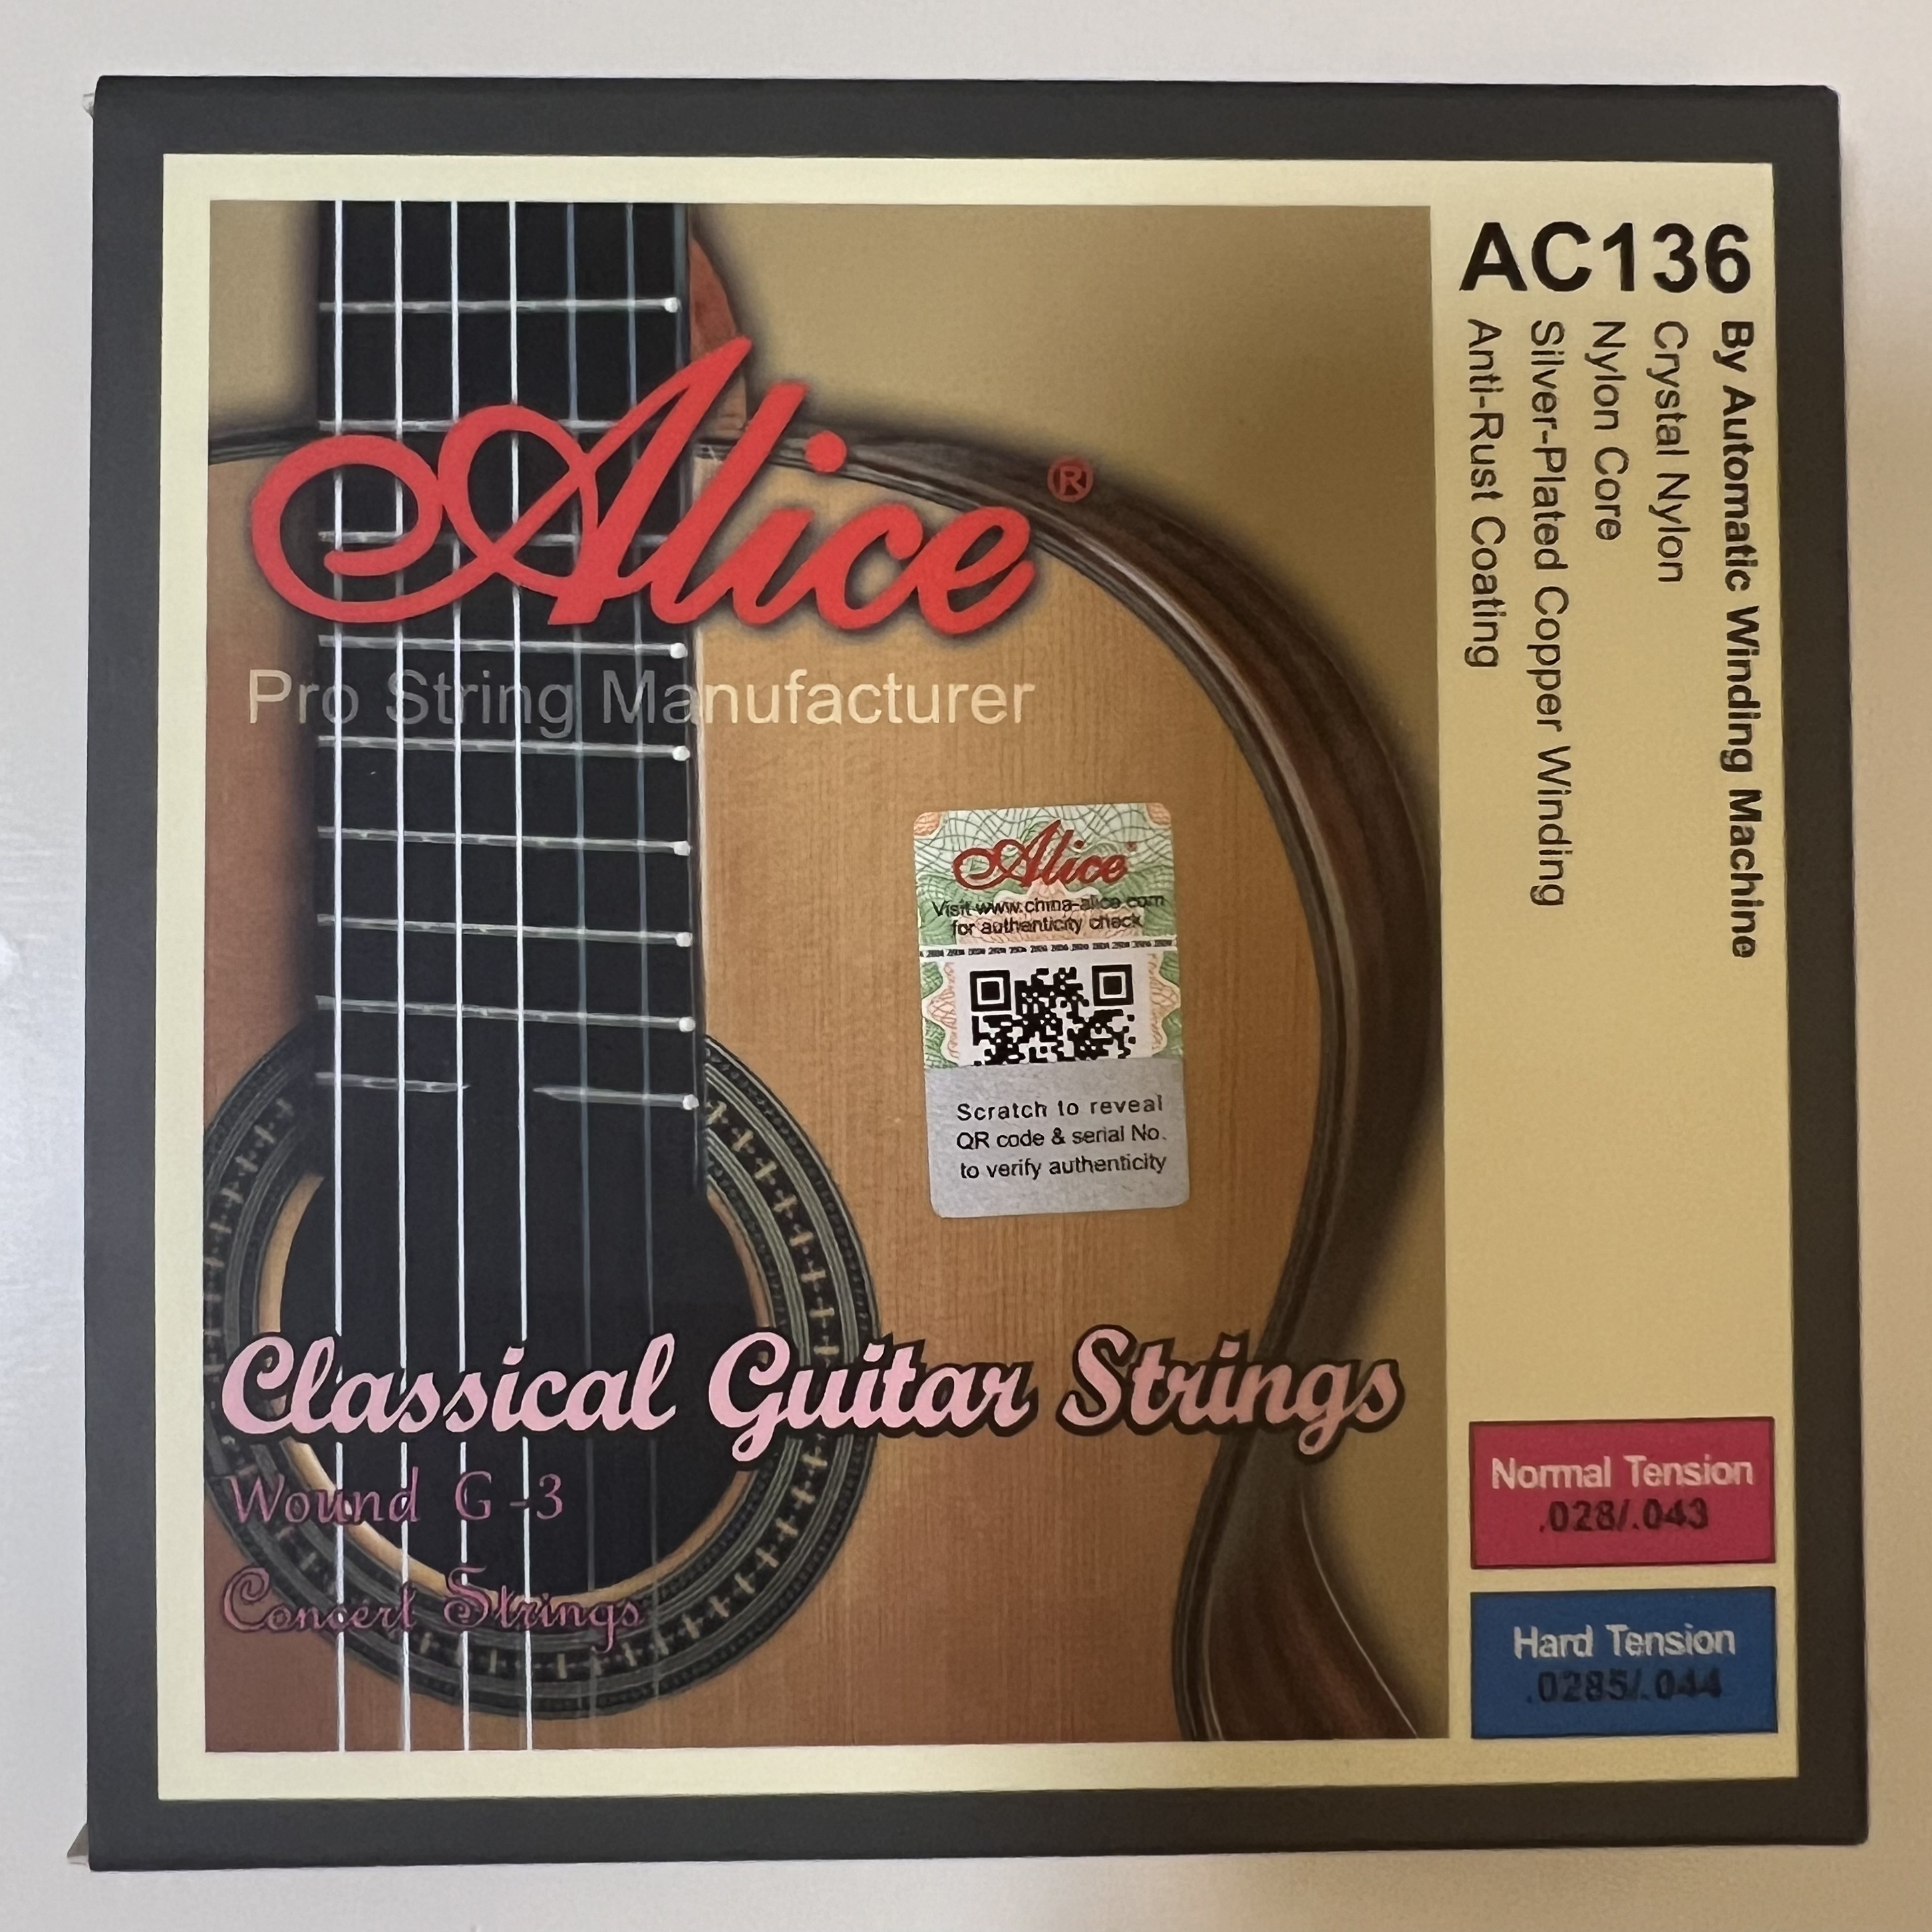 

Nylon Classical Guitar String Strings (a136-n)